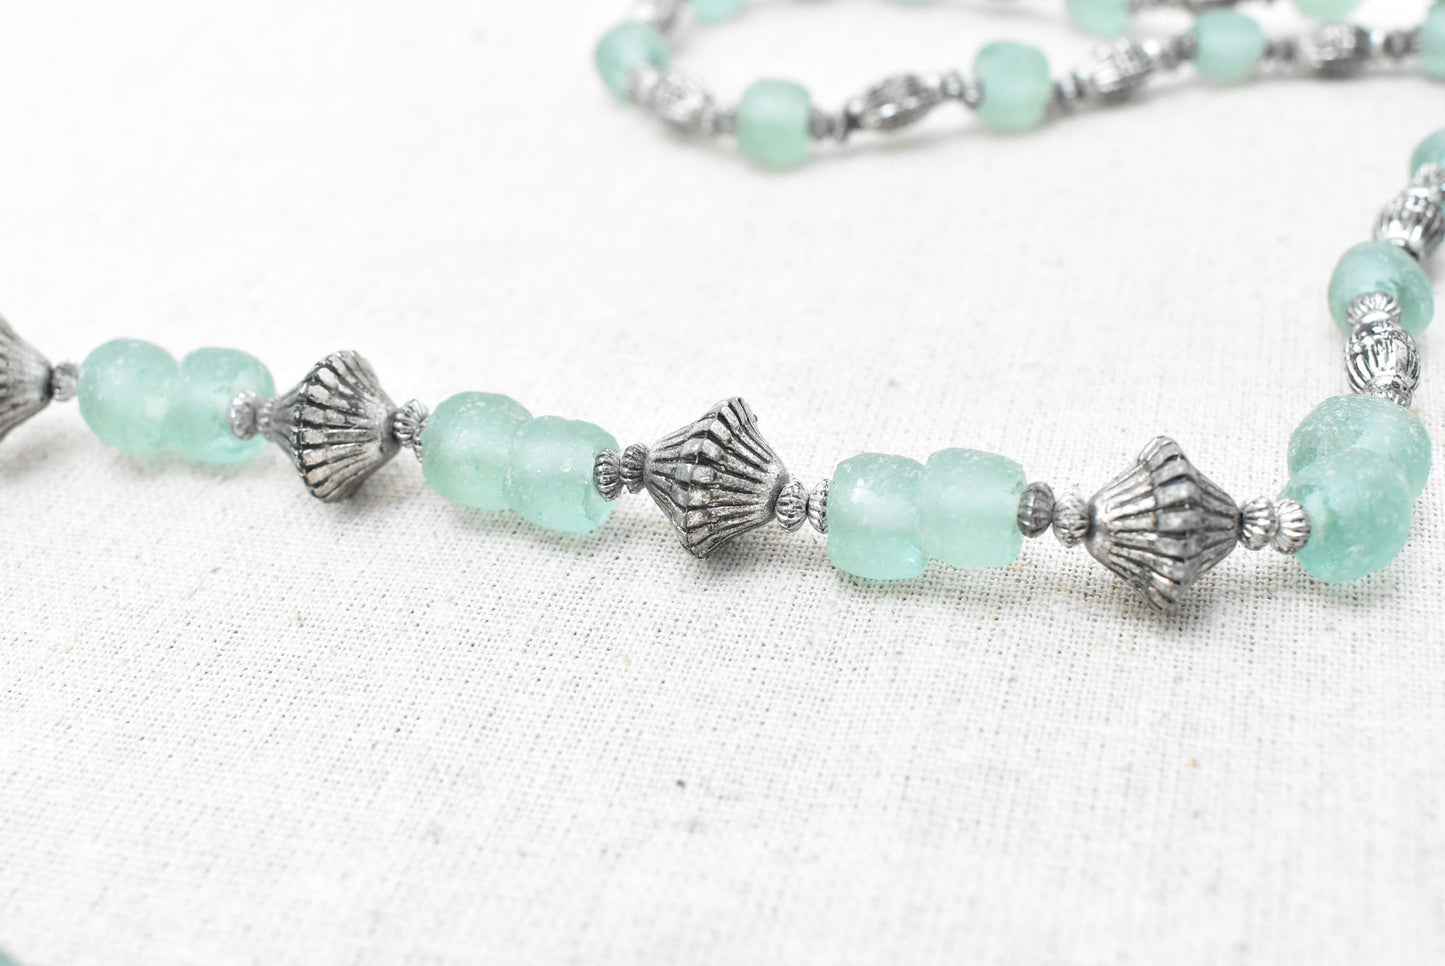 Seafoam green glass bead necklace